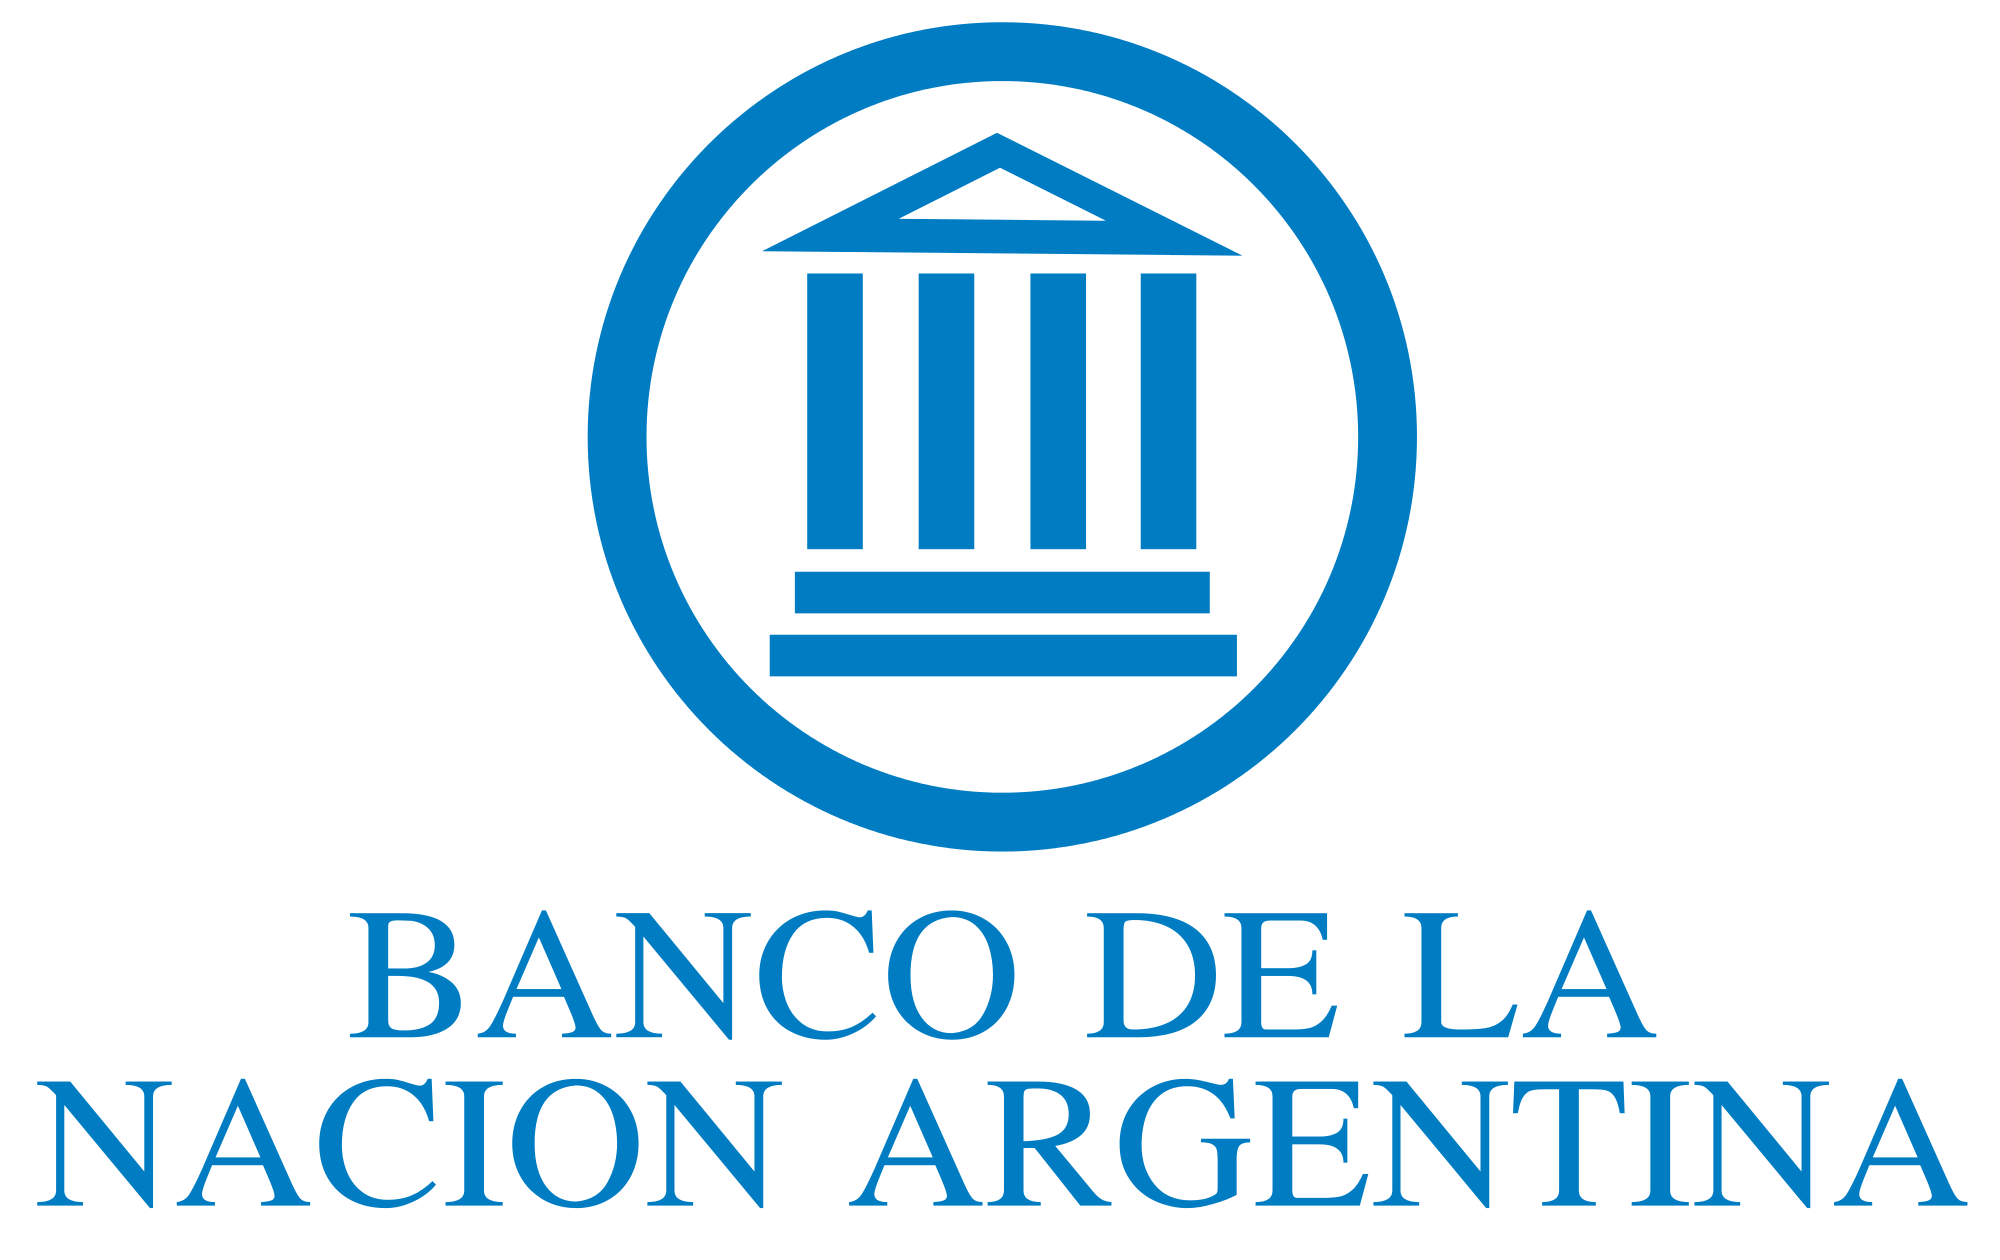 Banco Schahin Logo photo - 1